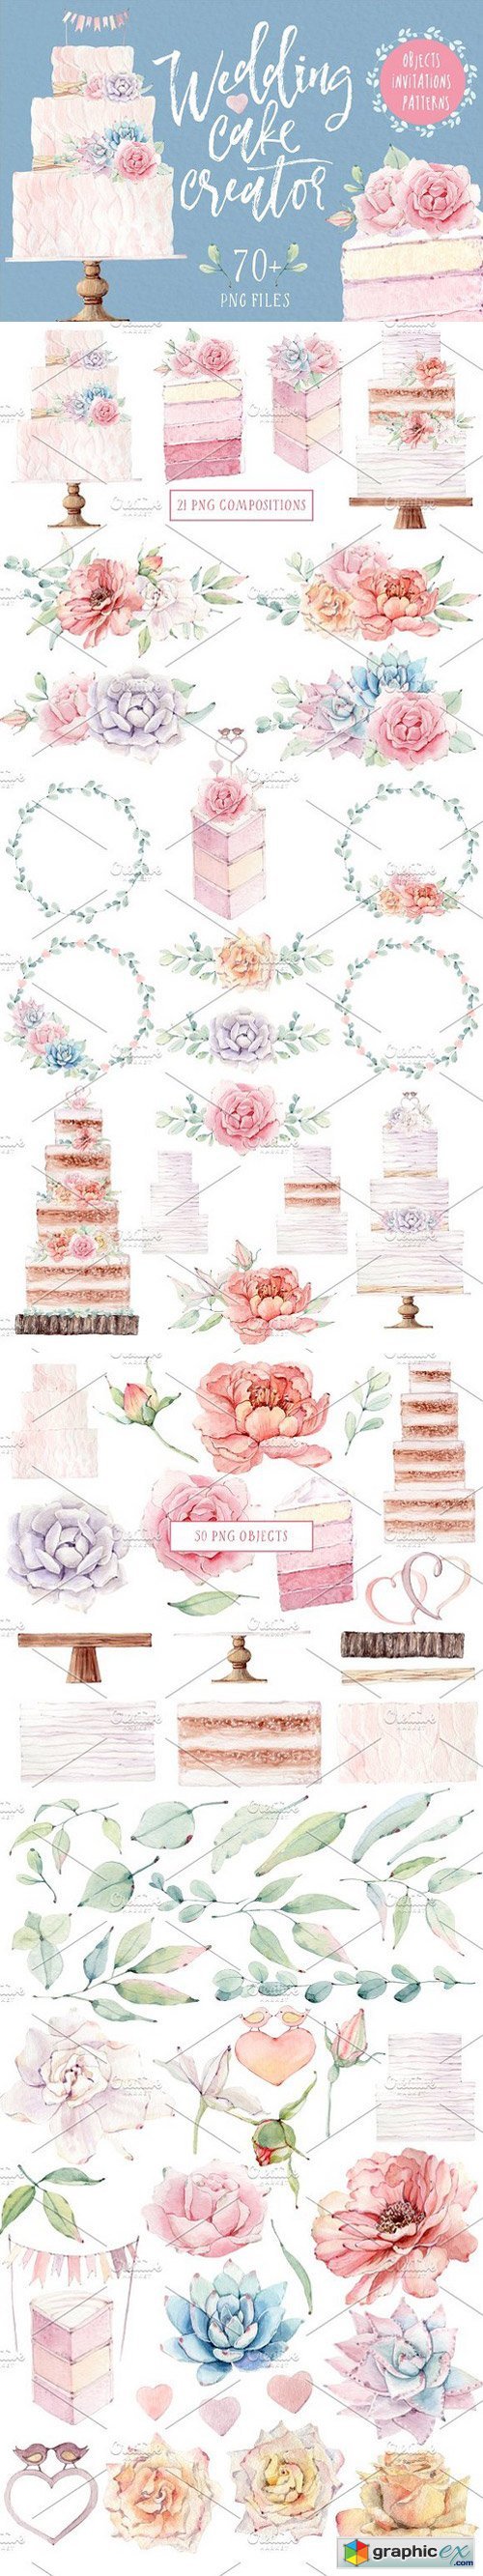 WEDDING CAKE CREATOR watercolor set